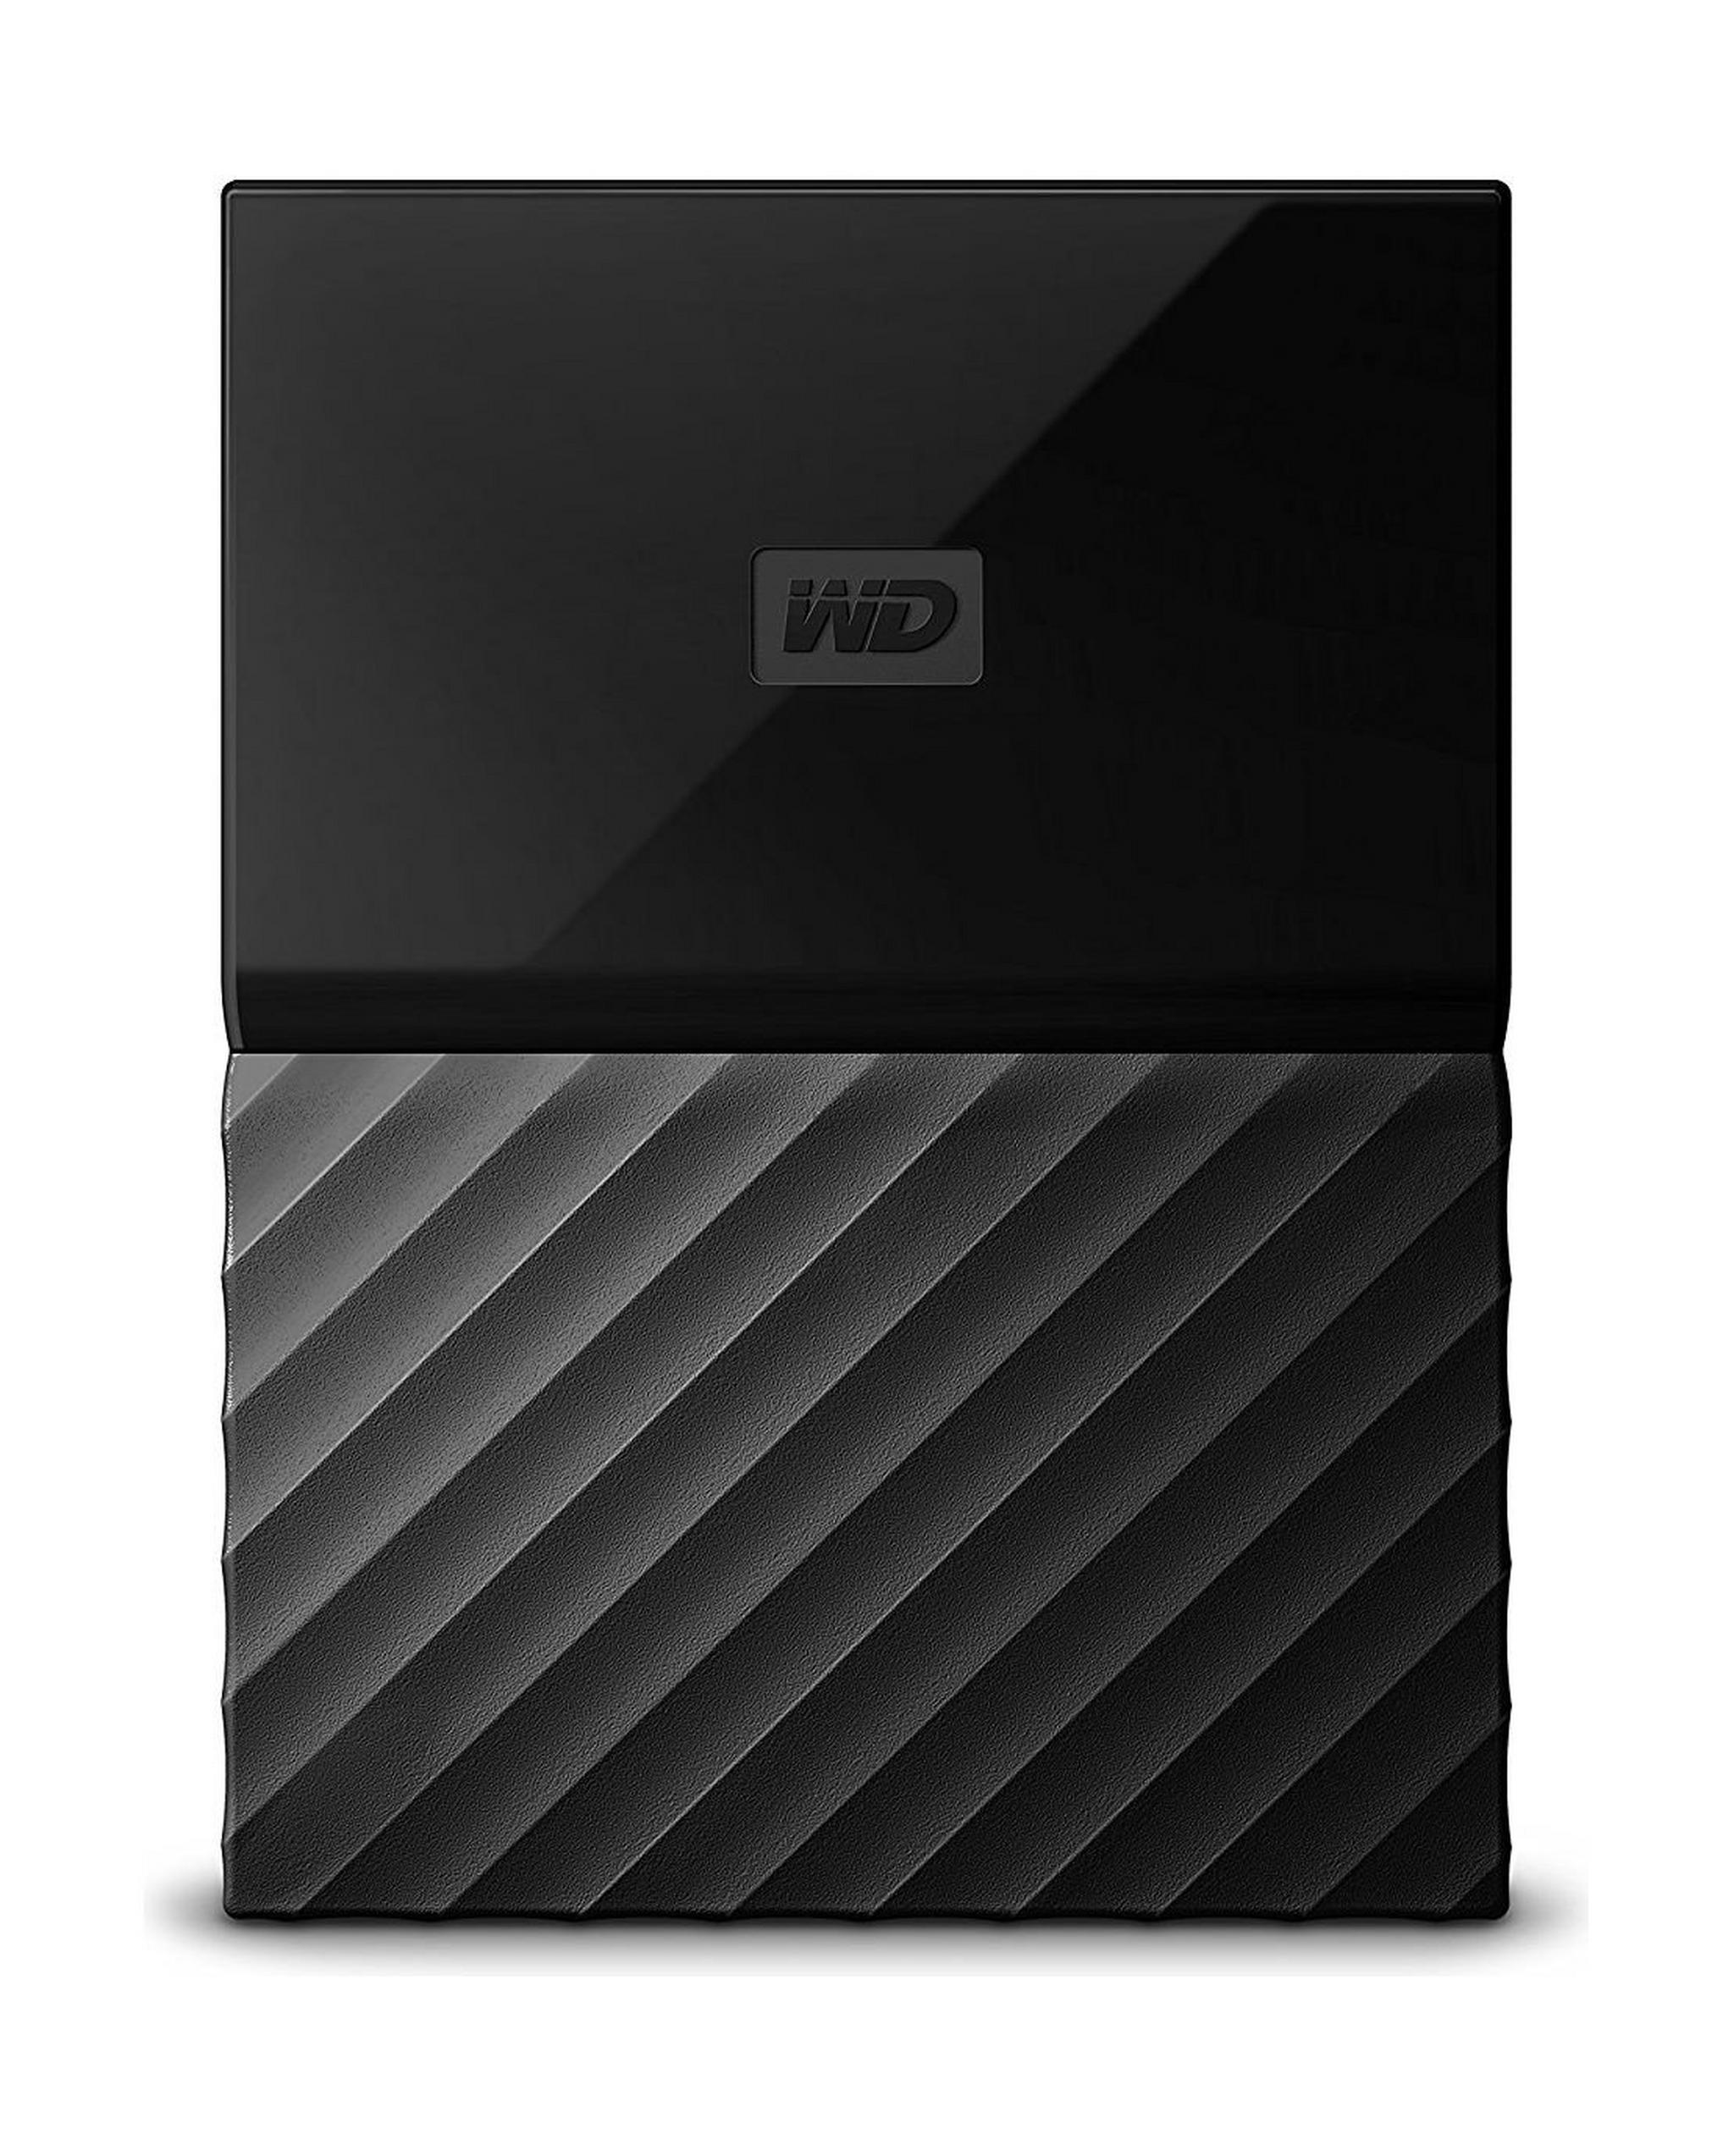 WD 1TB Black My Passport for Mac Portable External Hard Drive - USB 3.0 (WDBFKF0010BBK)